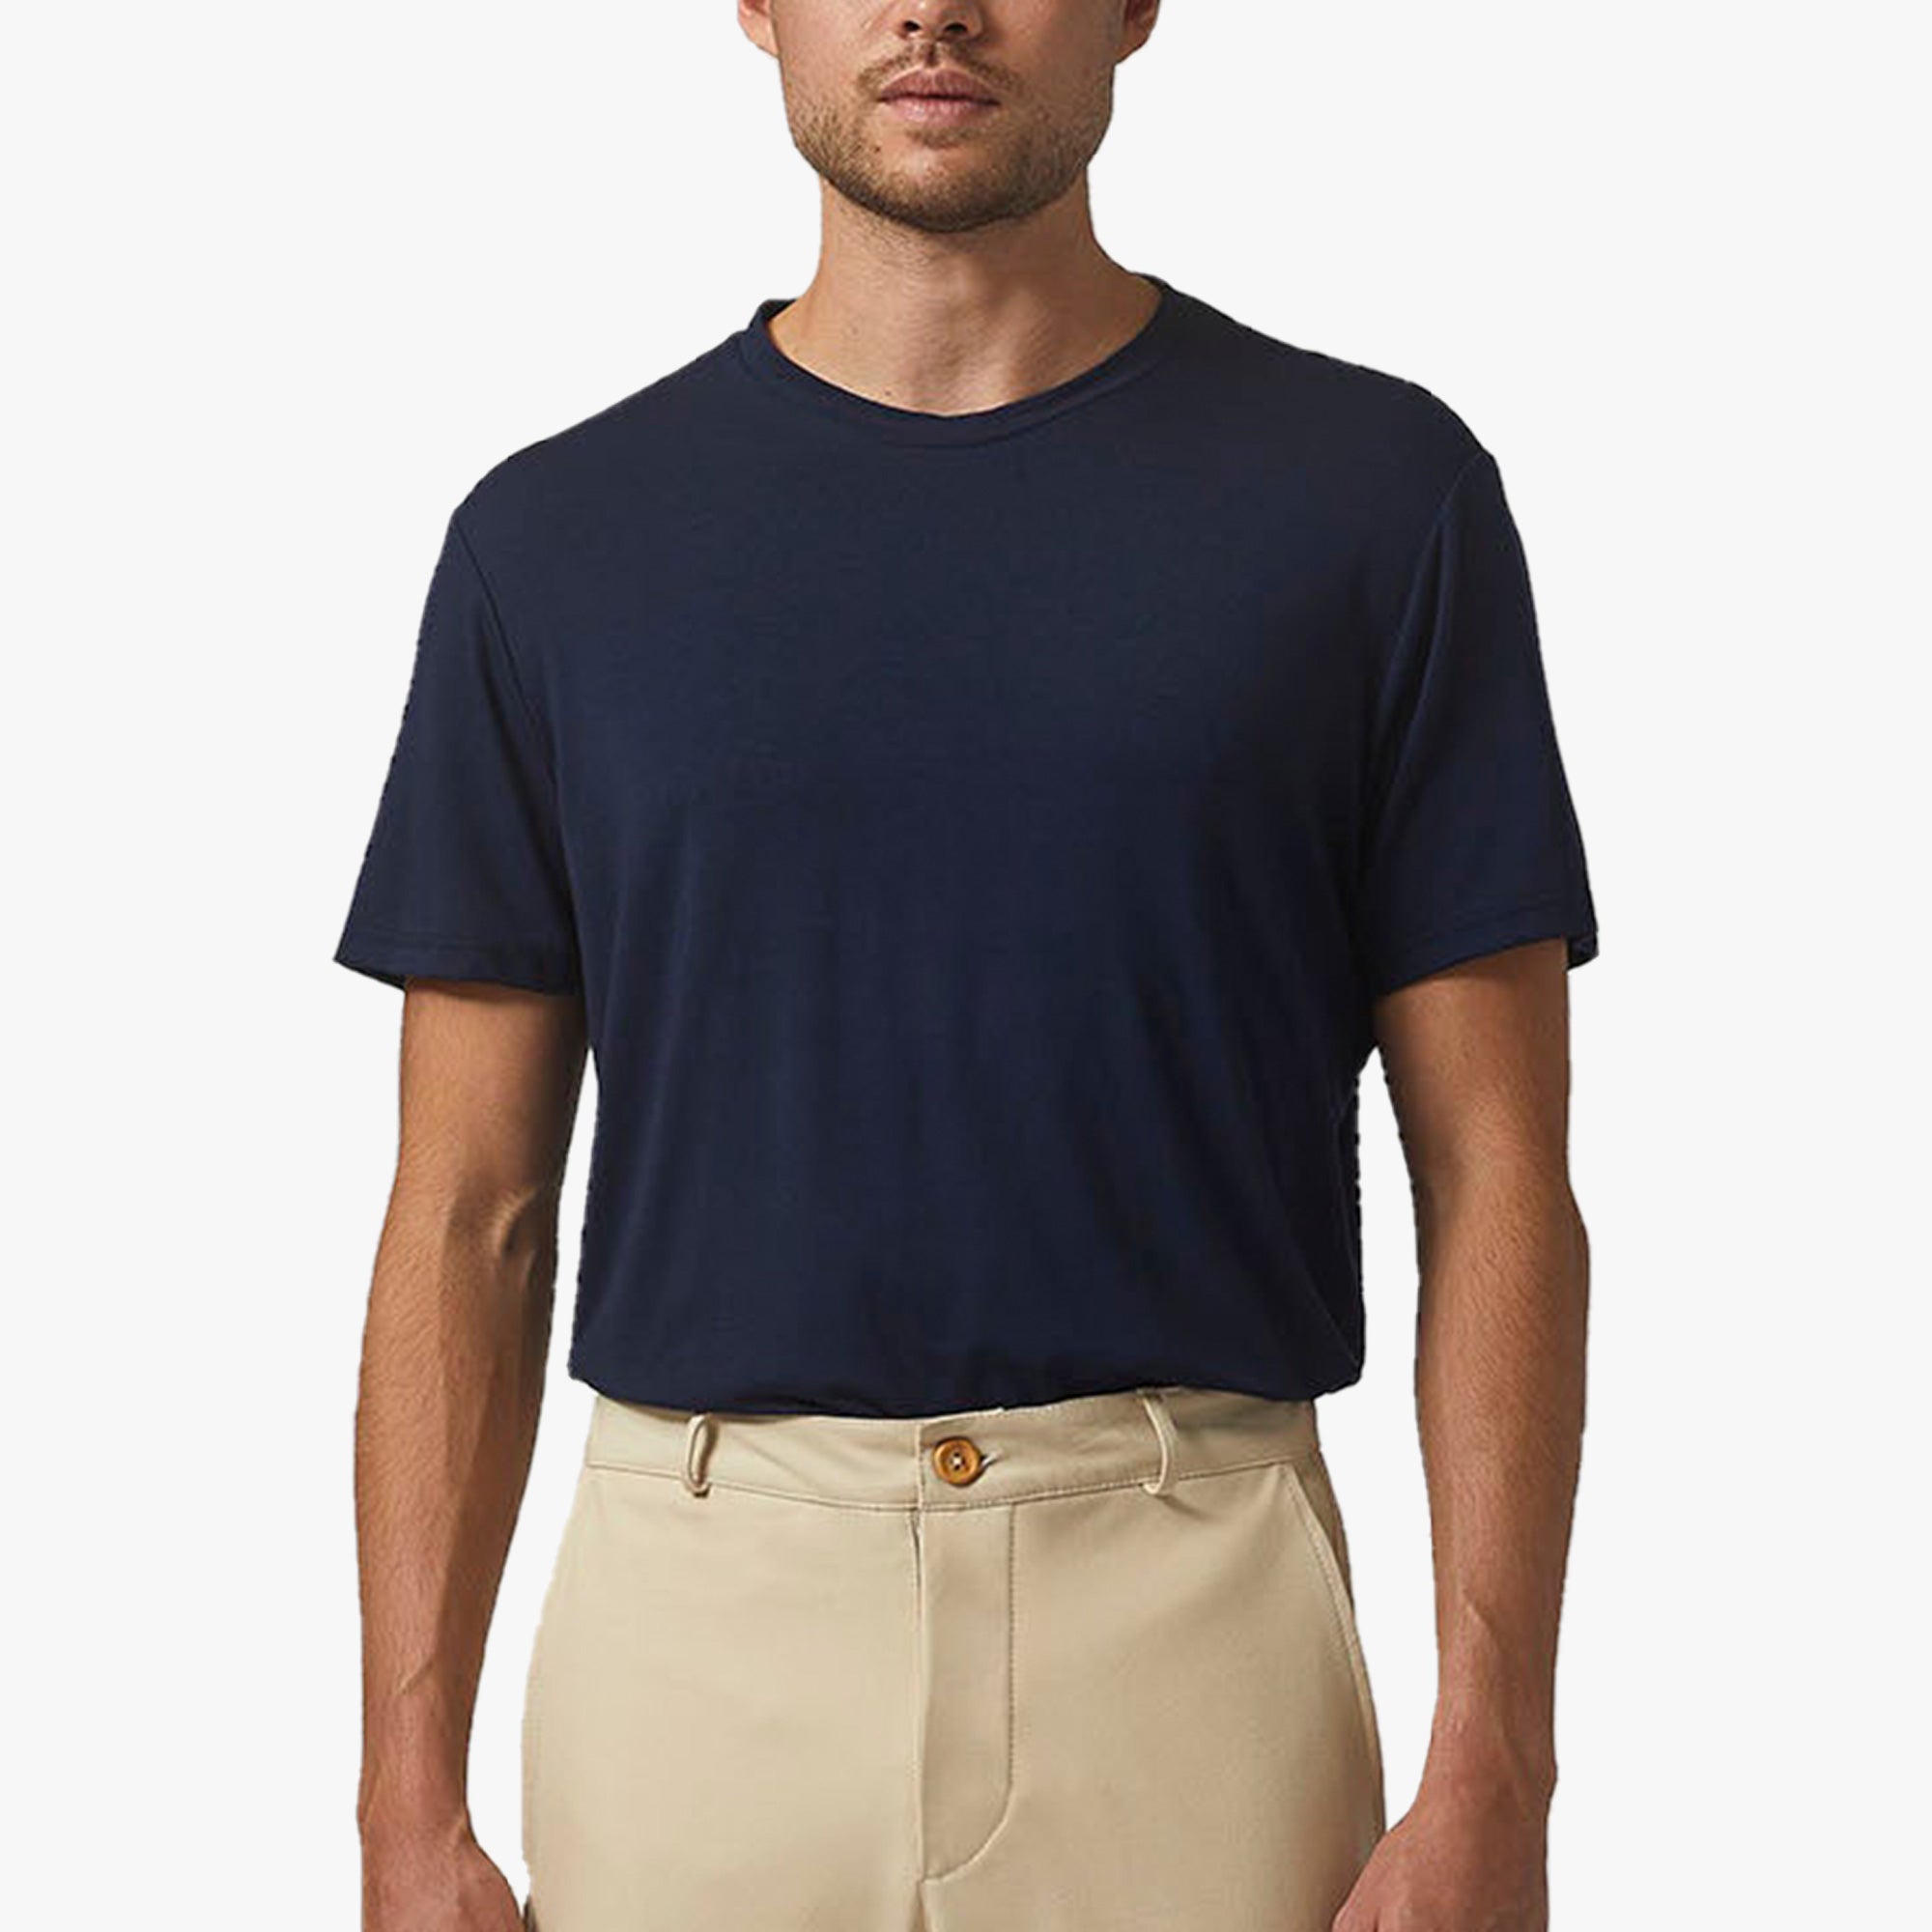 Adesso Man Bamboo T-Shirt - Navy